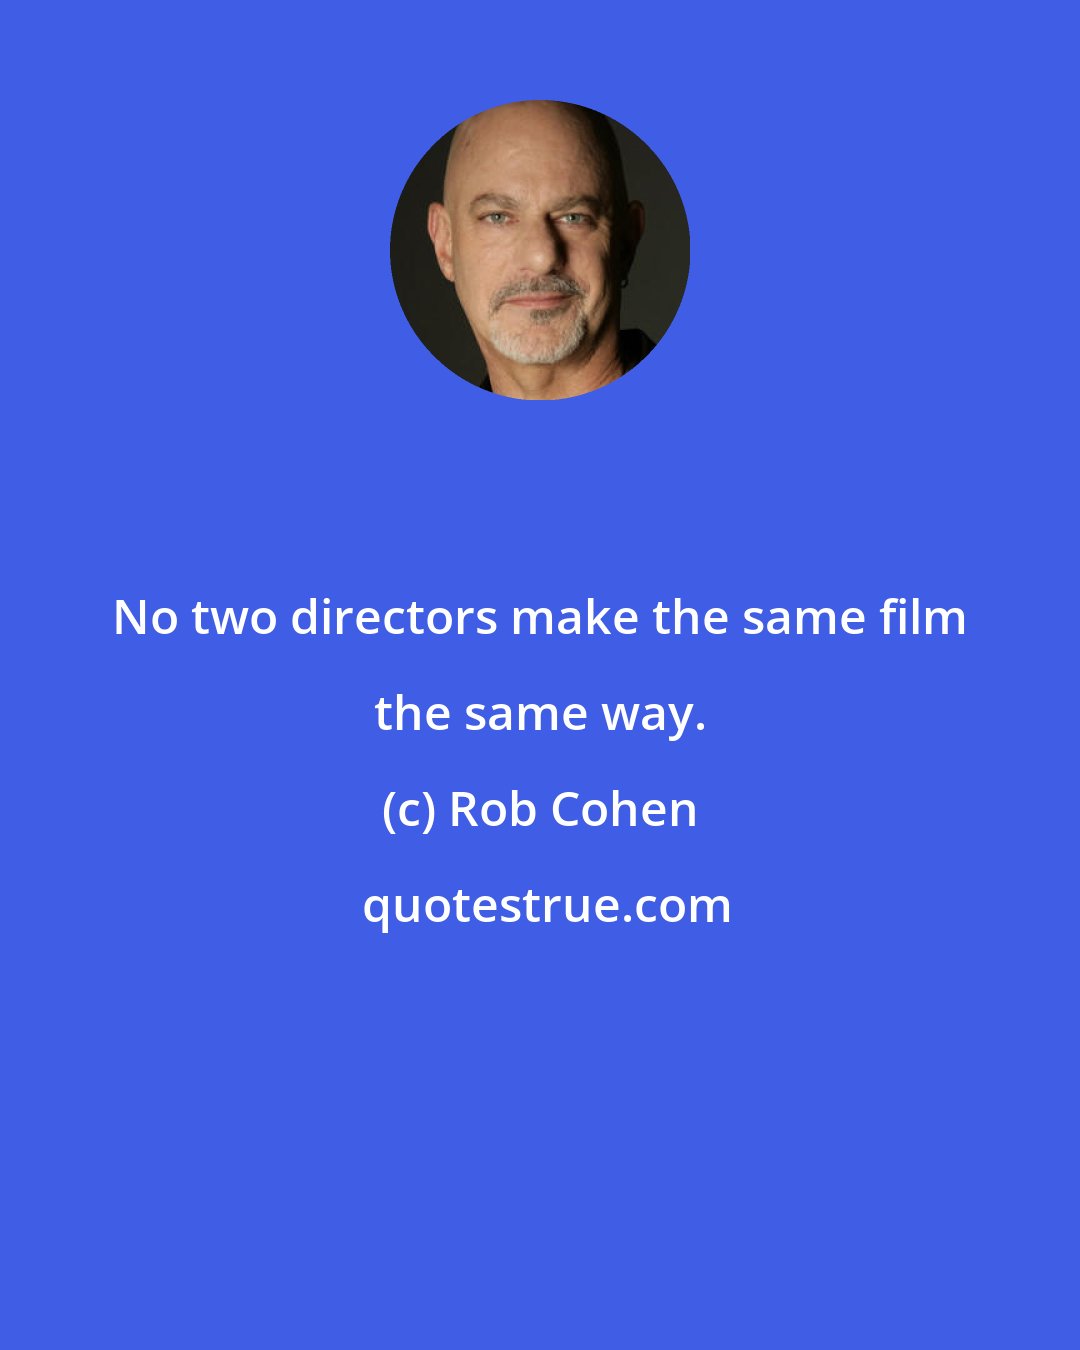 Rob Cohen: No two directors make the same film the same way.